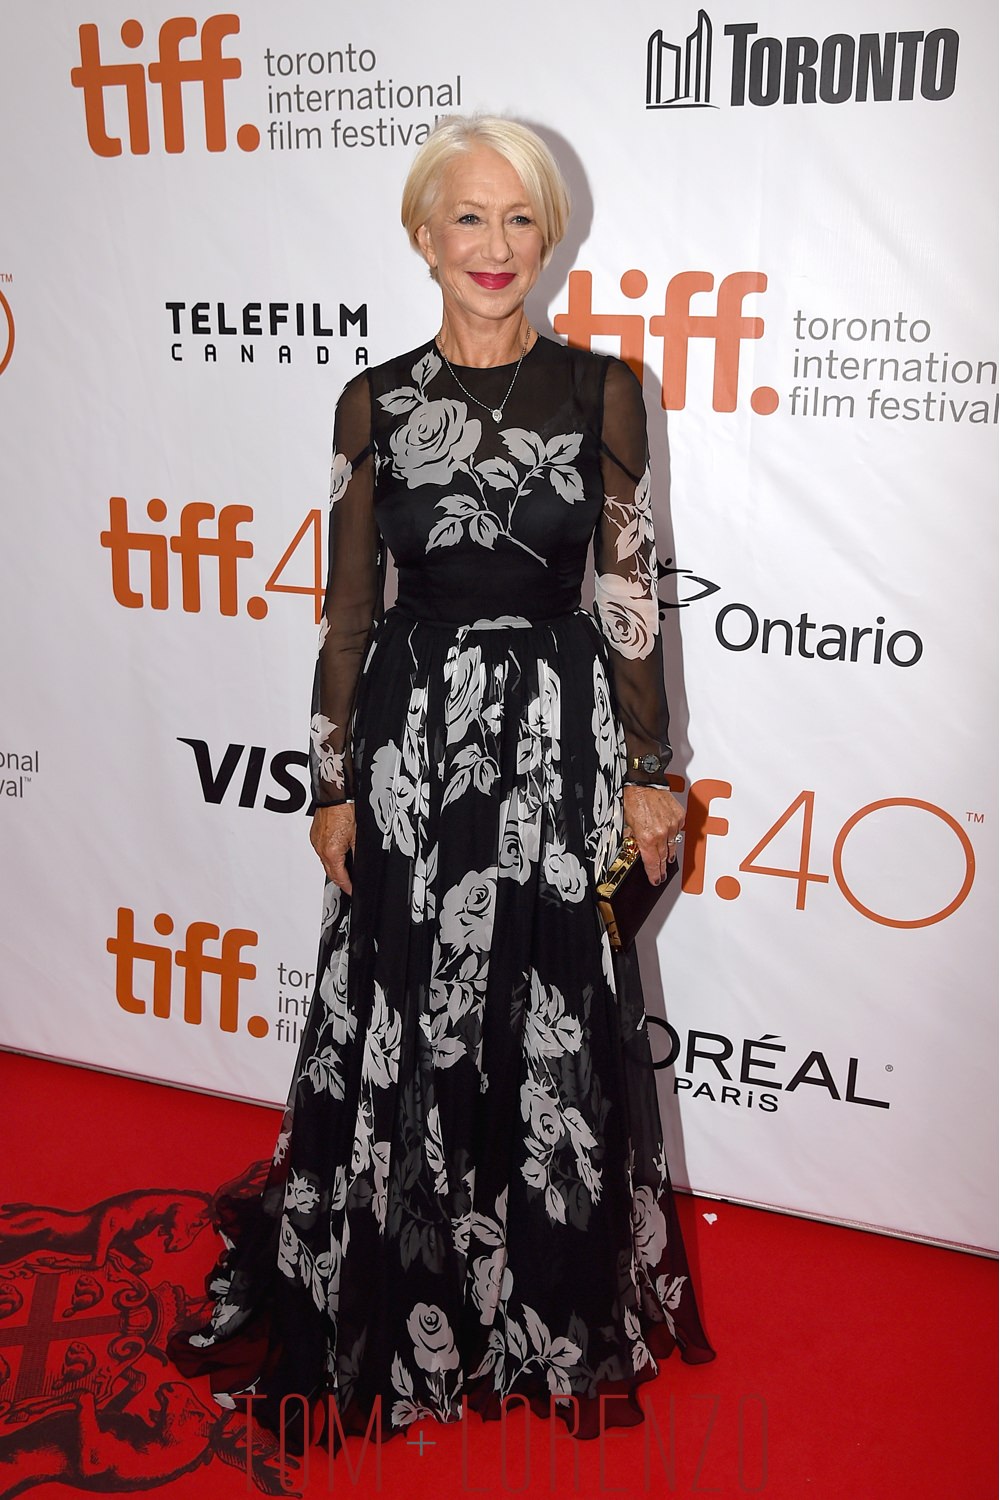 Helen-Mirren-Eye-In-The-Sky-Movie-Premiere-Toronto-Film-Festival-Red-Carpet-Dolce-Gabbana-Tom-Lorenzo-Site-TLO (1)